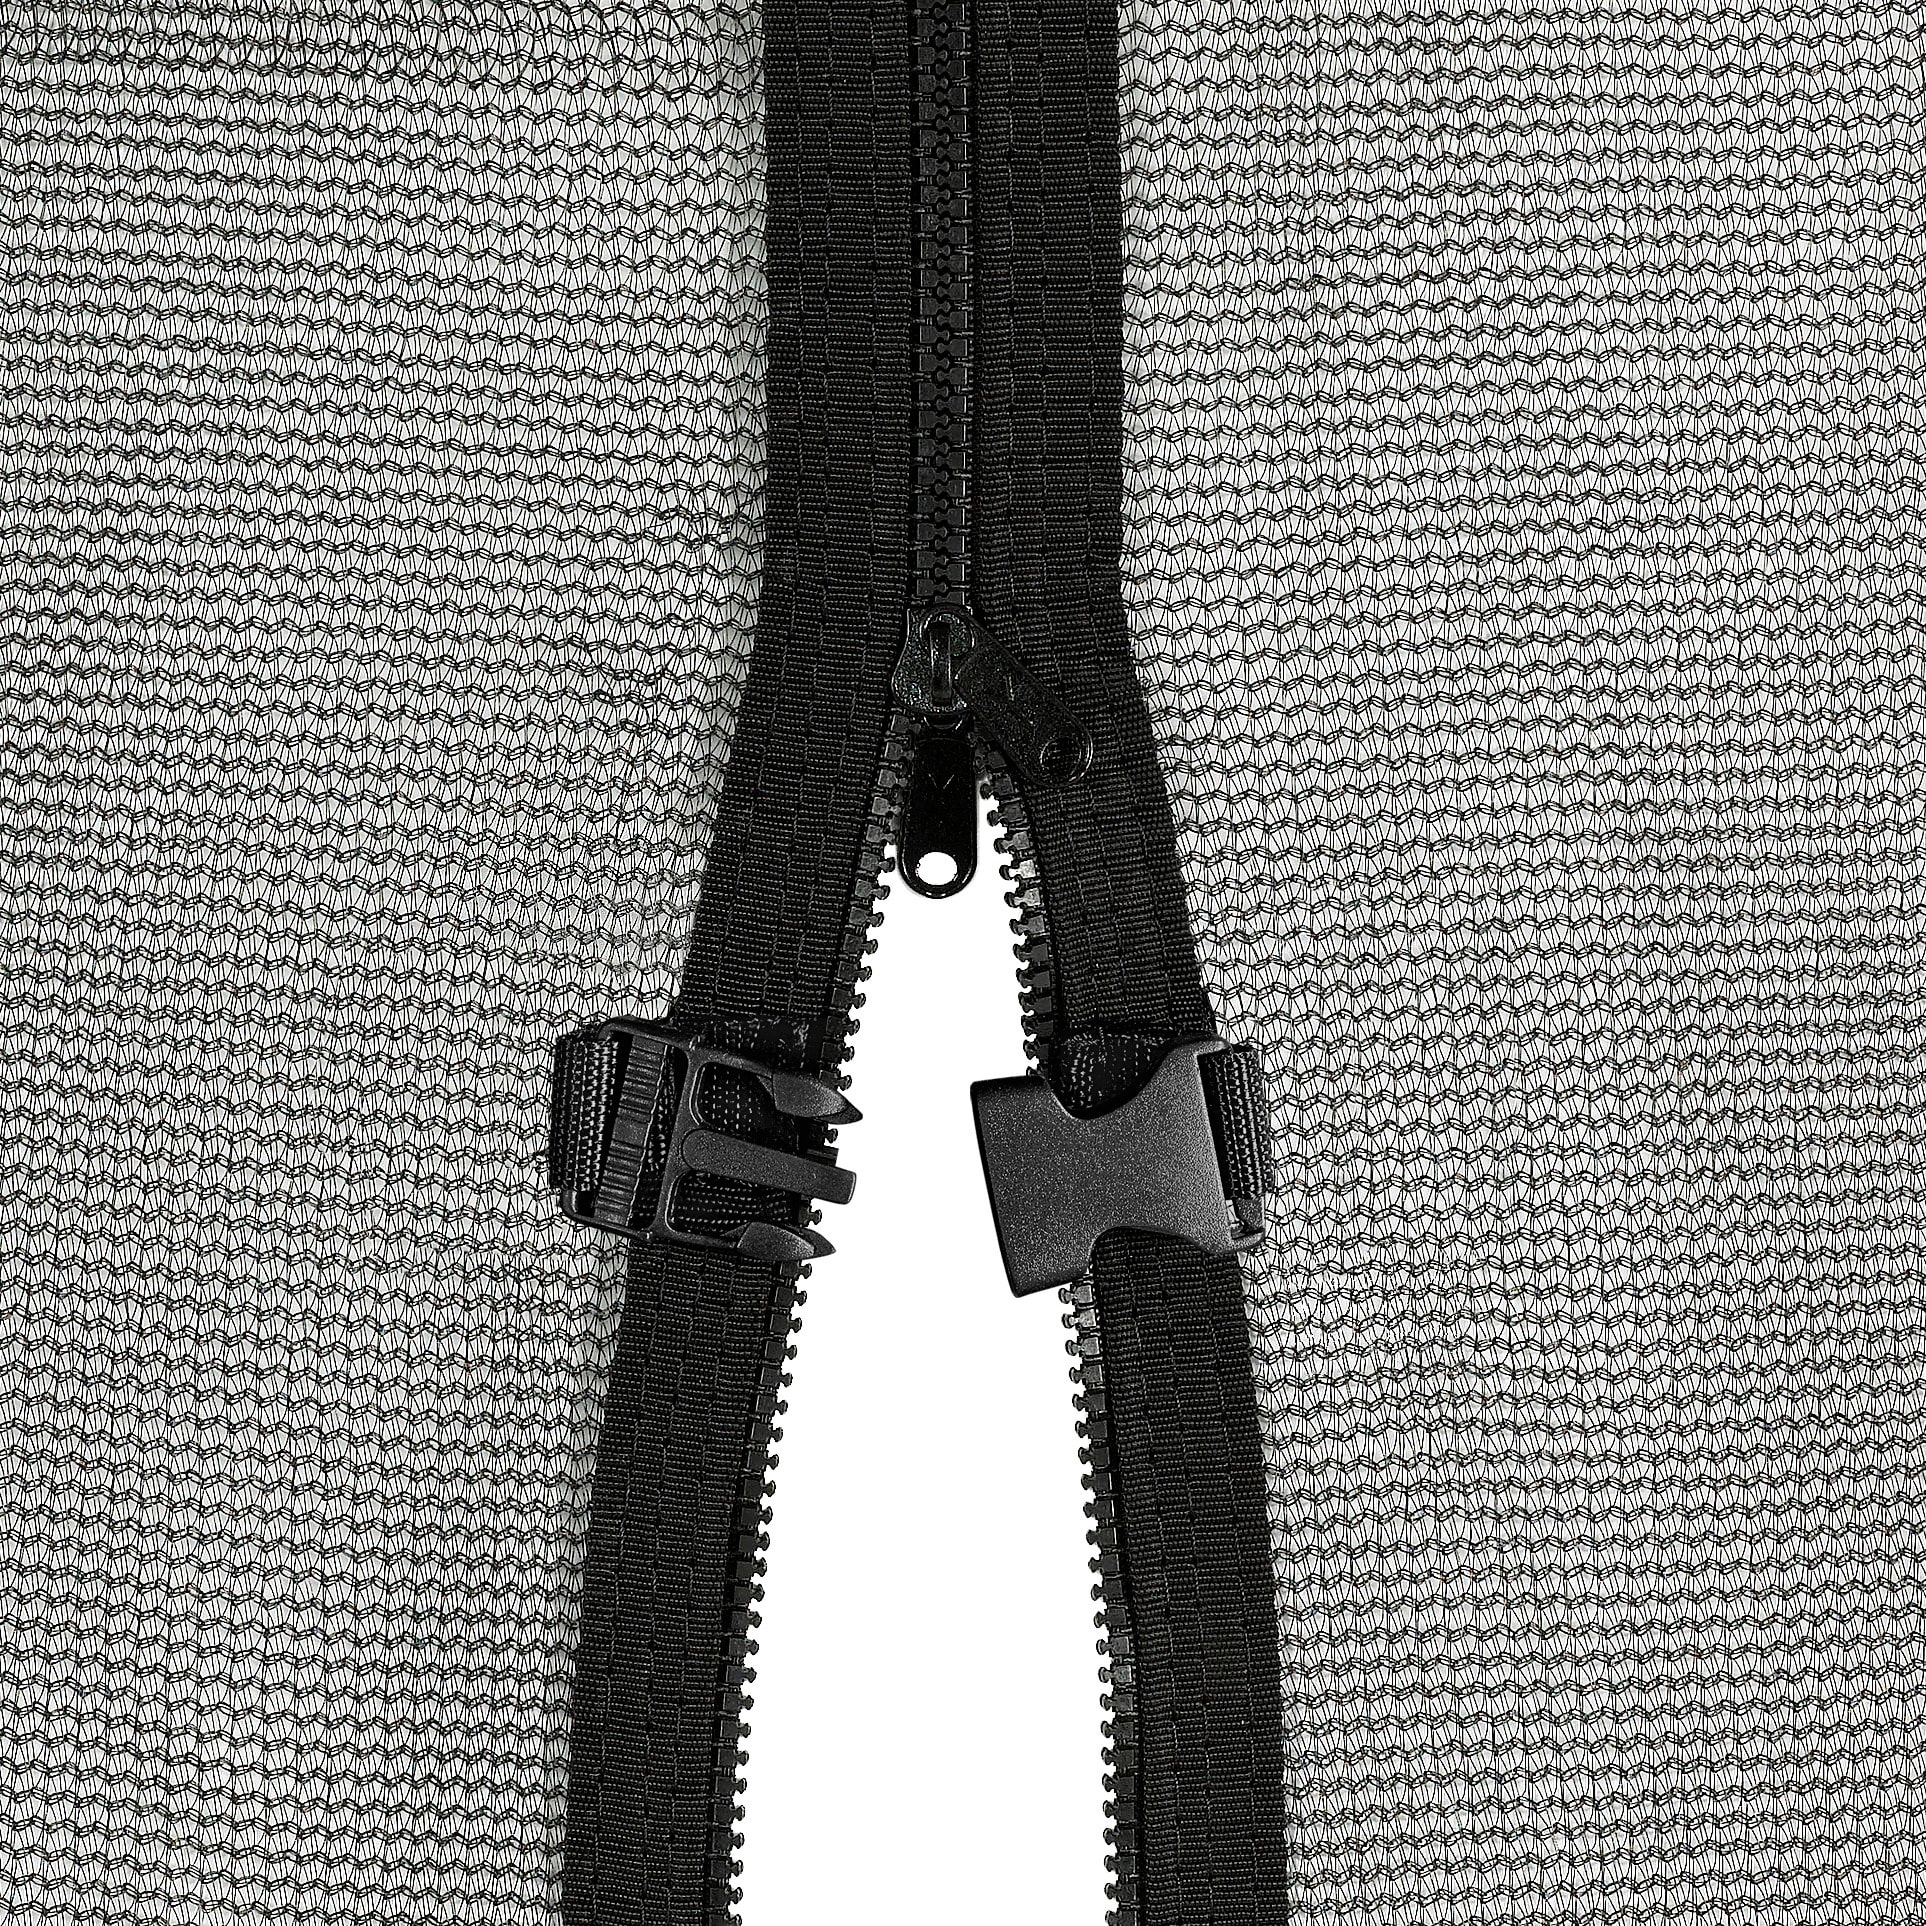 Machrus Upper Bounce8' X 14'Gymnastics Style, Rectangular Trampoline Set -  Blue/Black